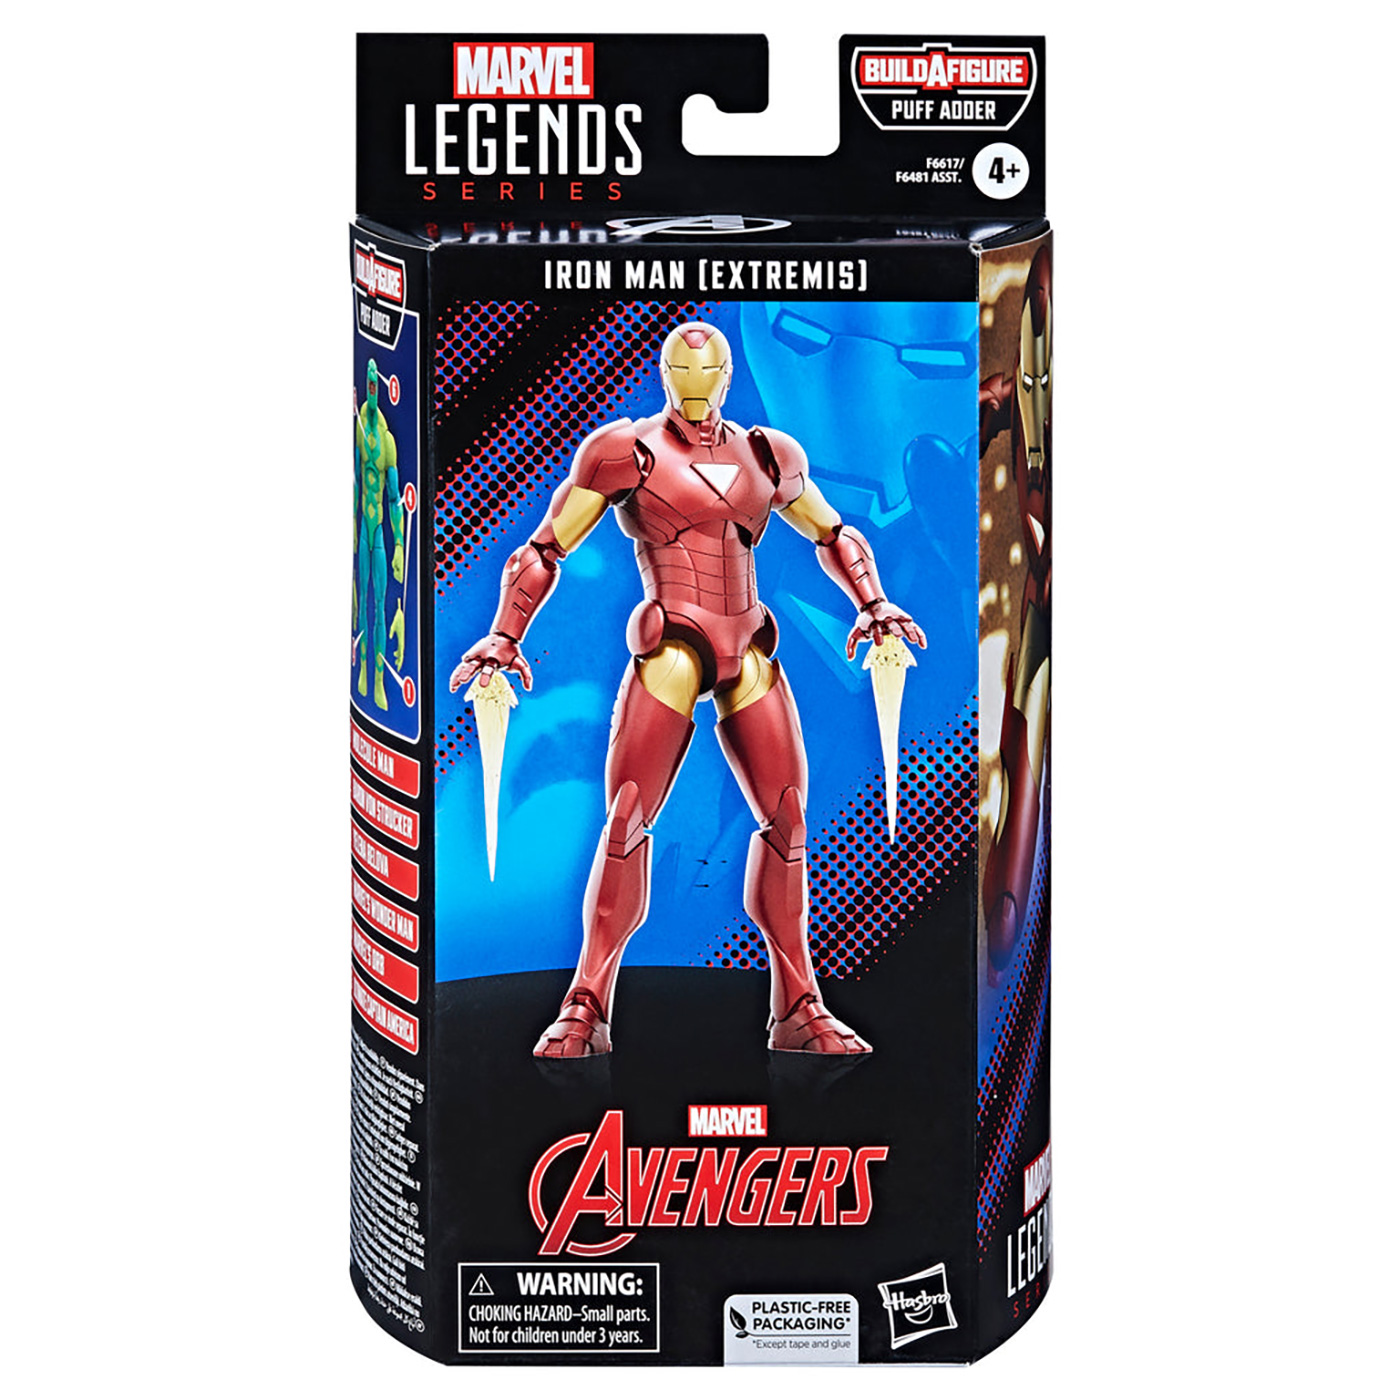 Marvel Legends BAF Puff Adder Avengers Iron Man Extremis Comic 6-Inch Action Figure画像